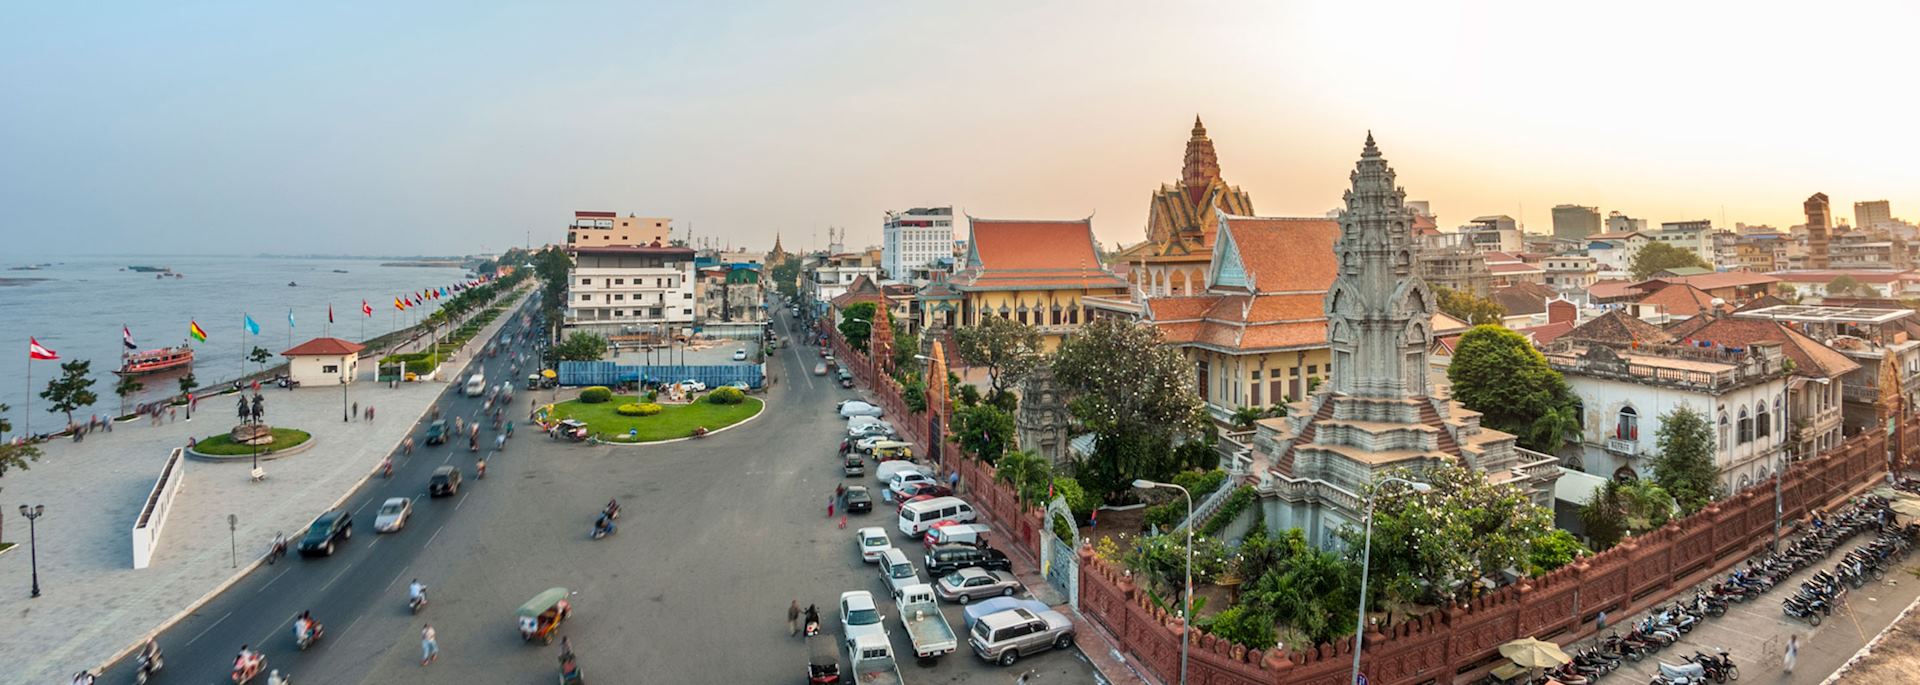 Riverfront at sunset, Phnom Penh